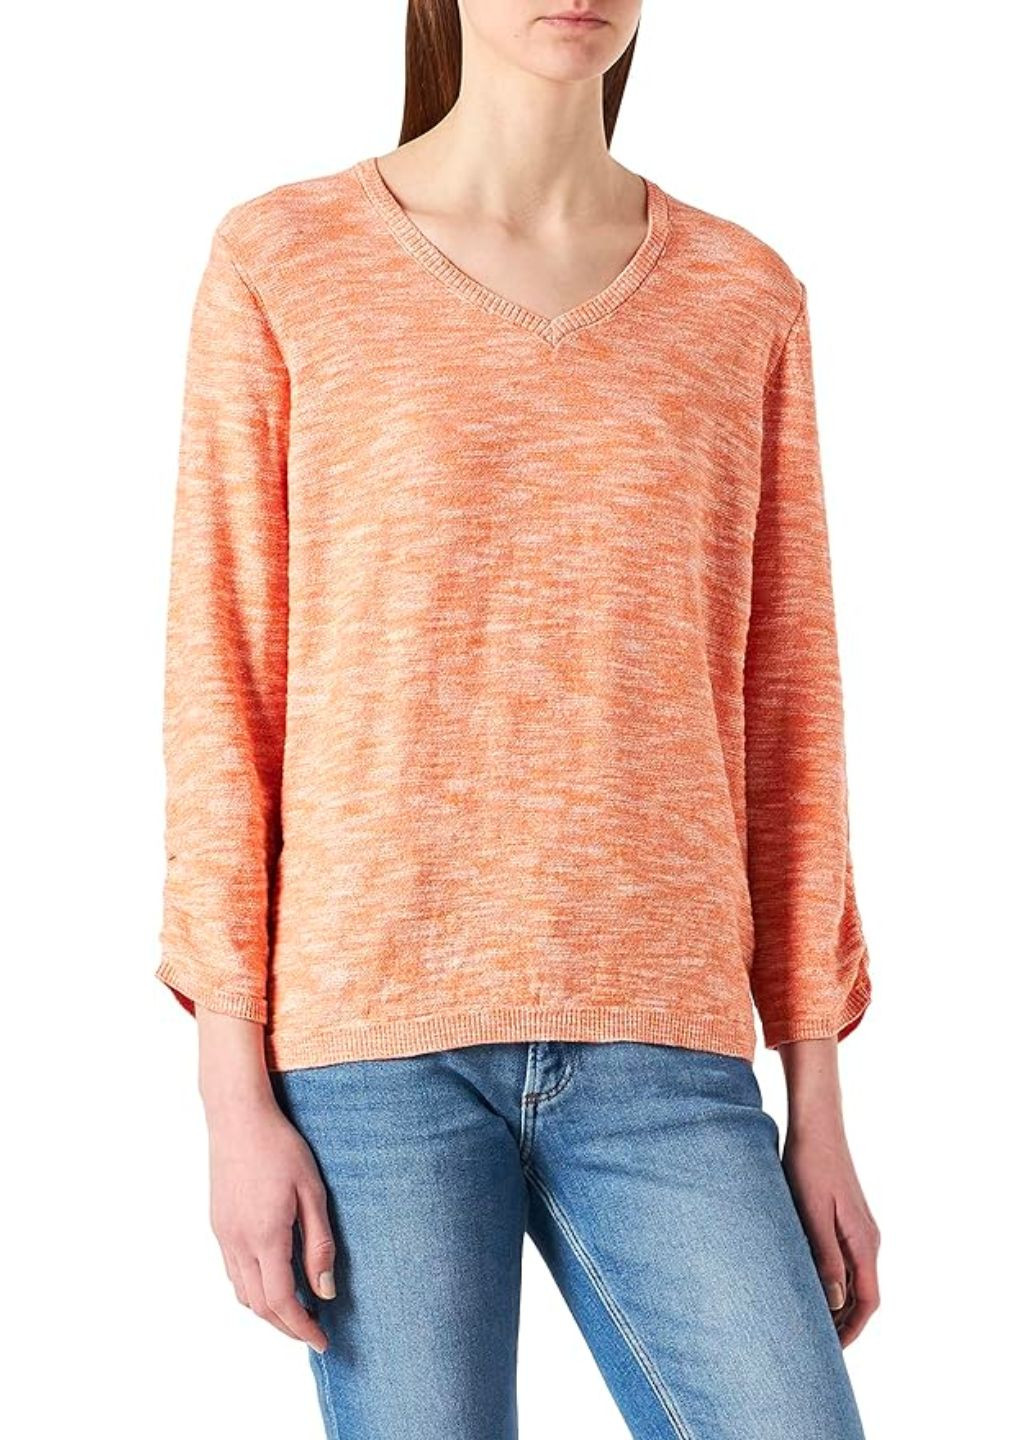 Пуловер женский весна-осень Оранжевый меланж Cecil (267579883)